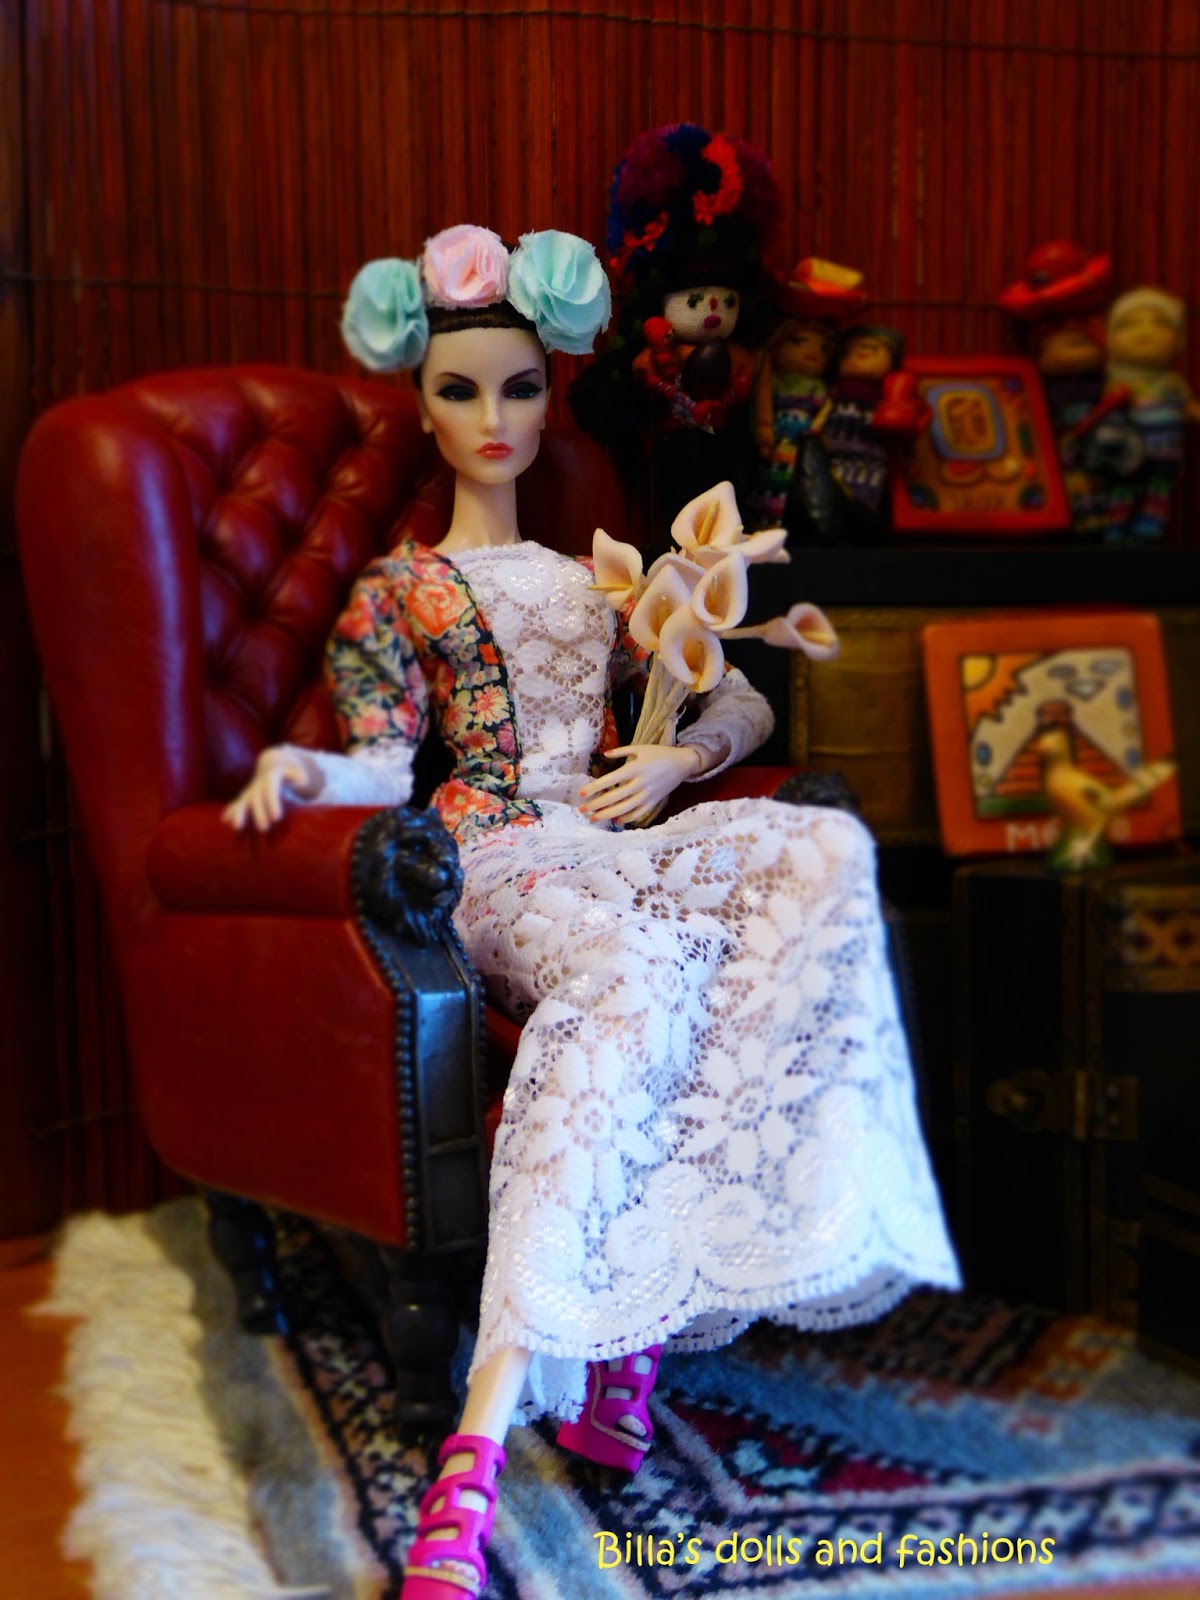 billa s dolls and fashions October 2015